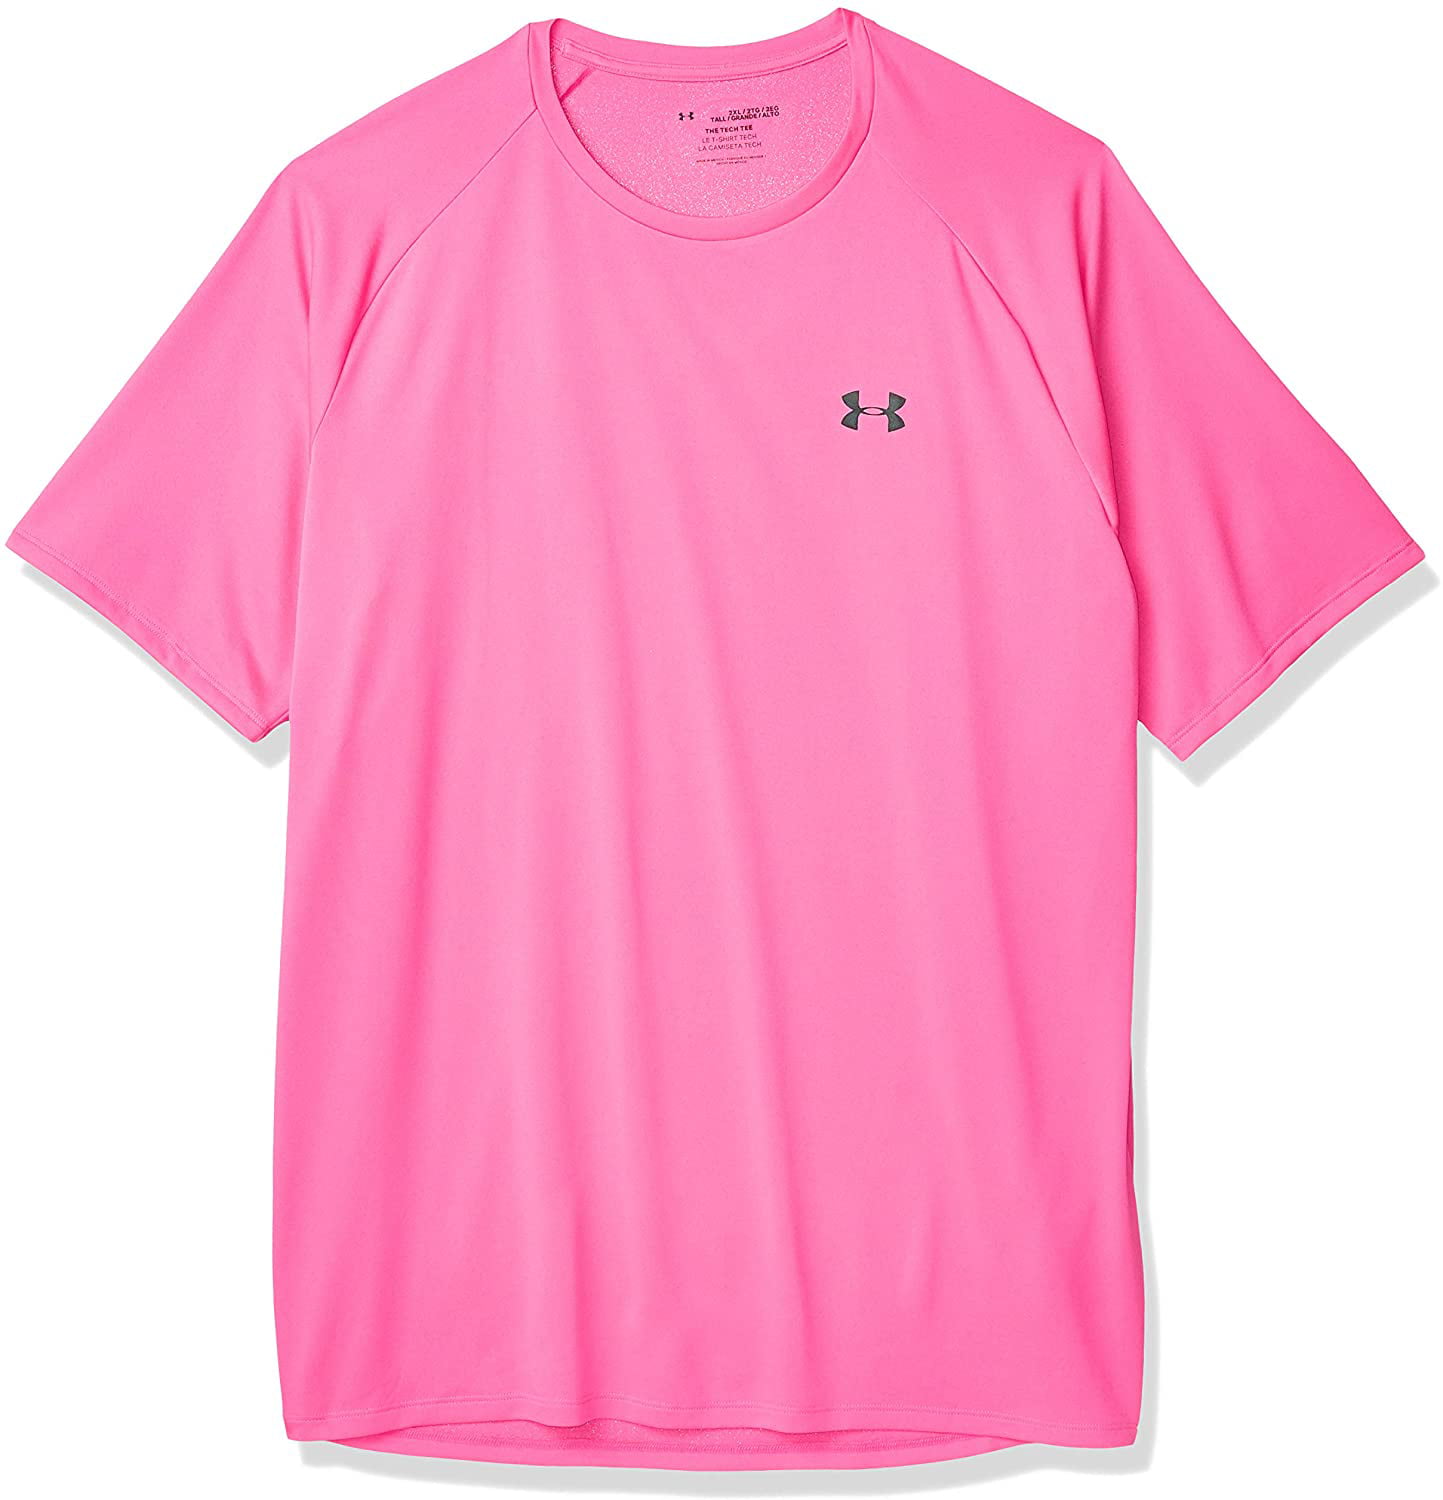 Under Armour Men's Tech 2.0 Short Sleeve T-Shirt, Pink Surge (687)/Black, Small | Walmart Canada